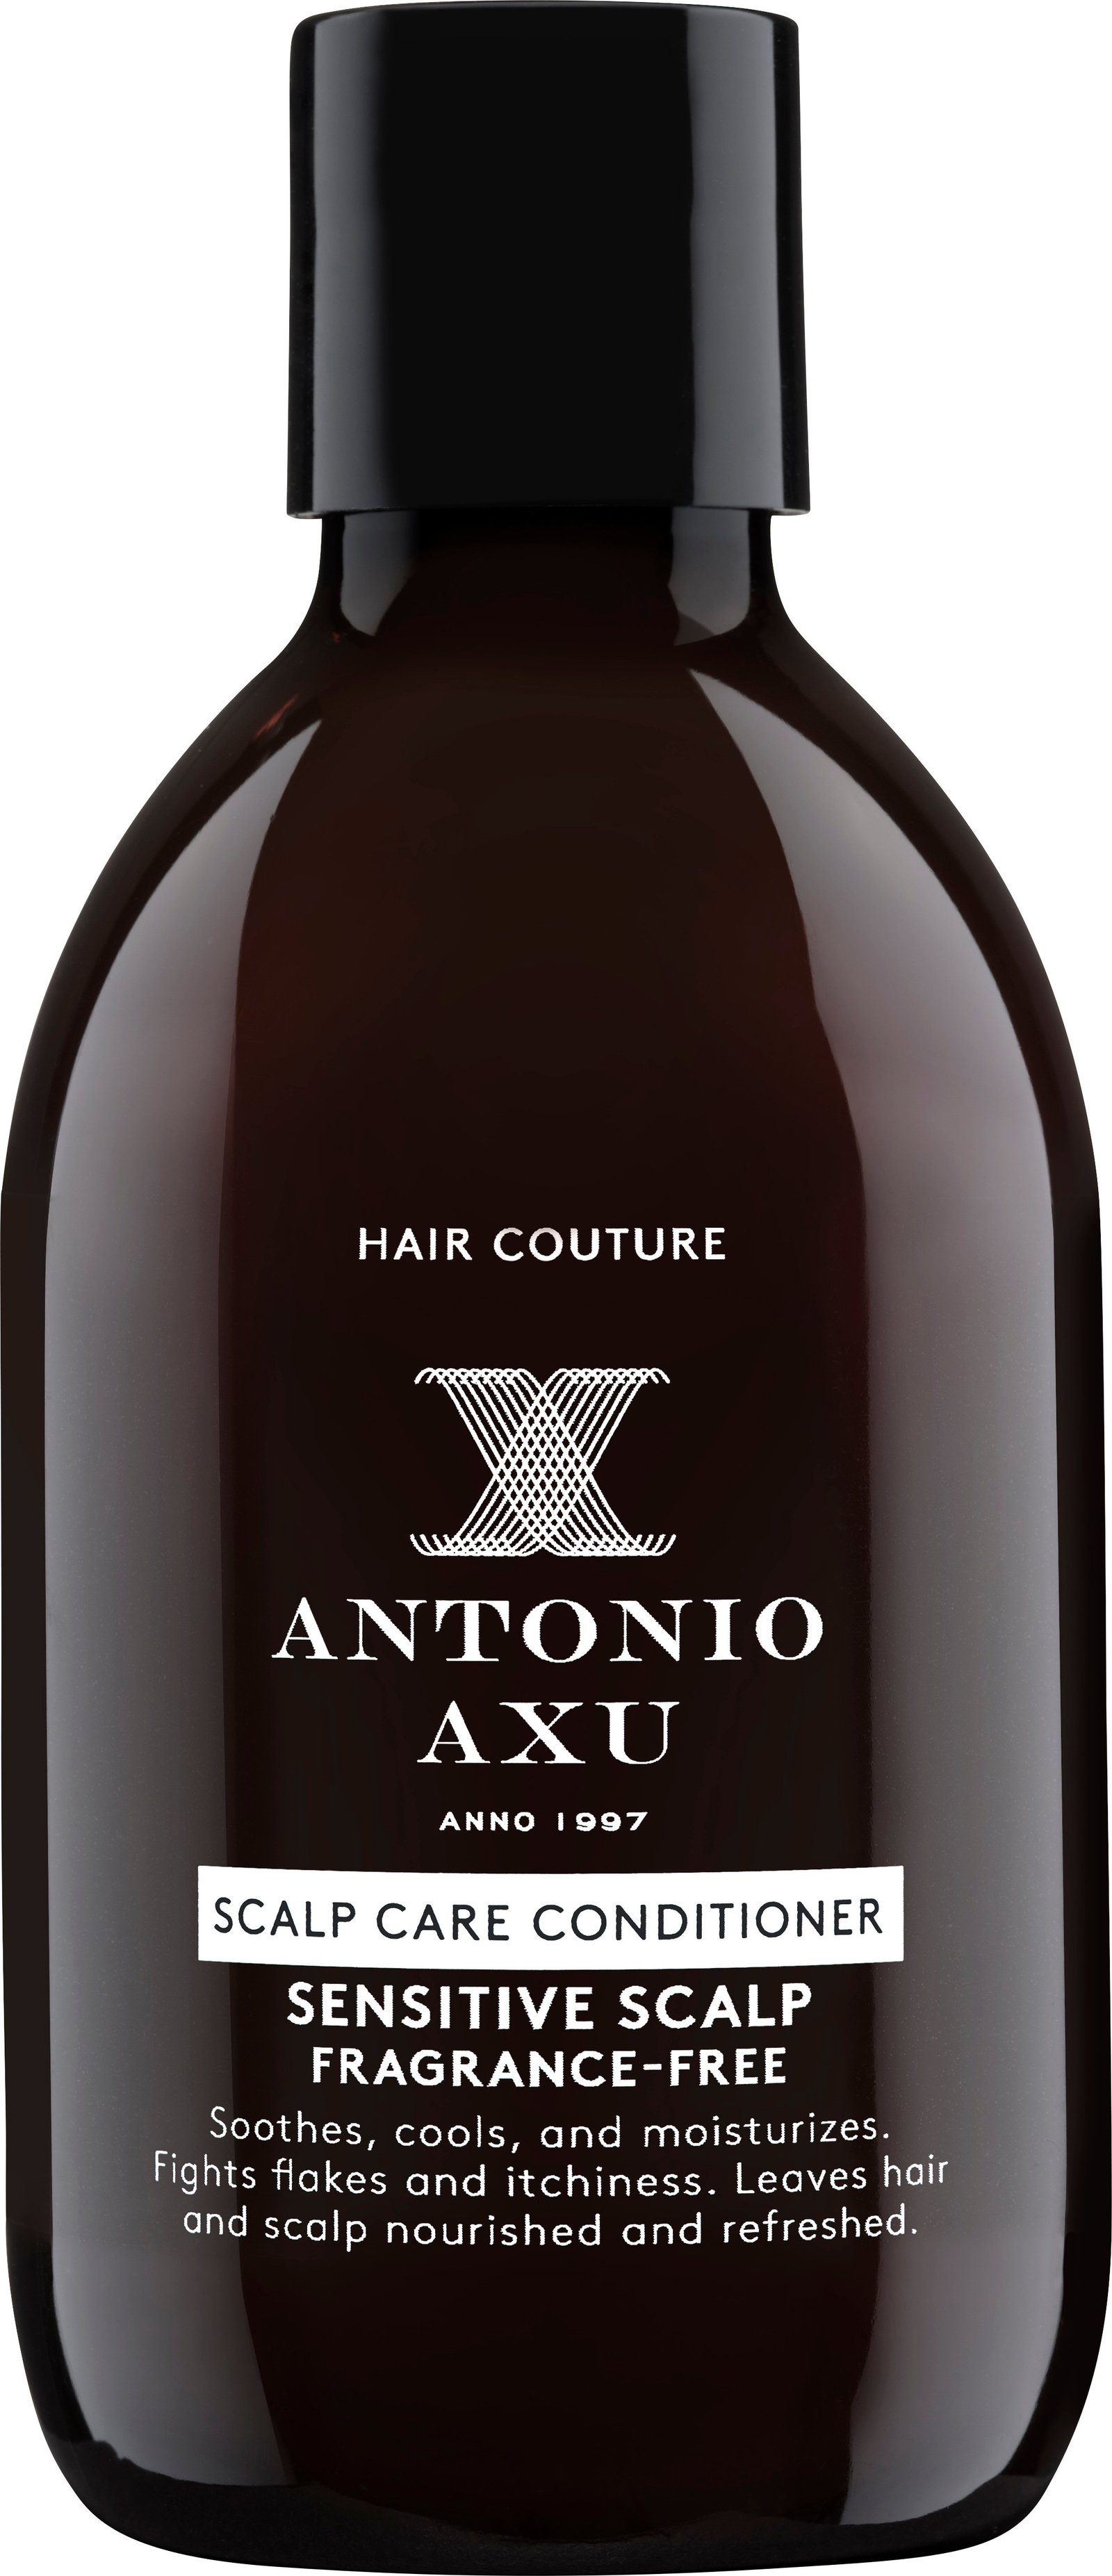 Antonio Axu Scalp Care Conditioner 300 ml